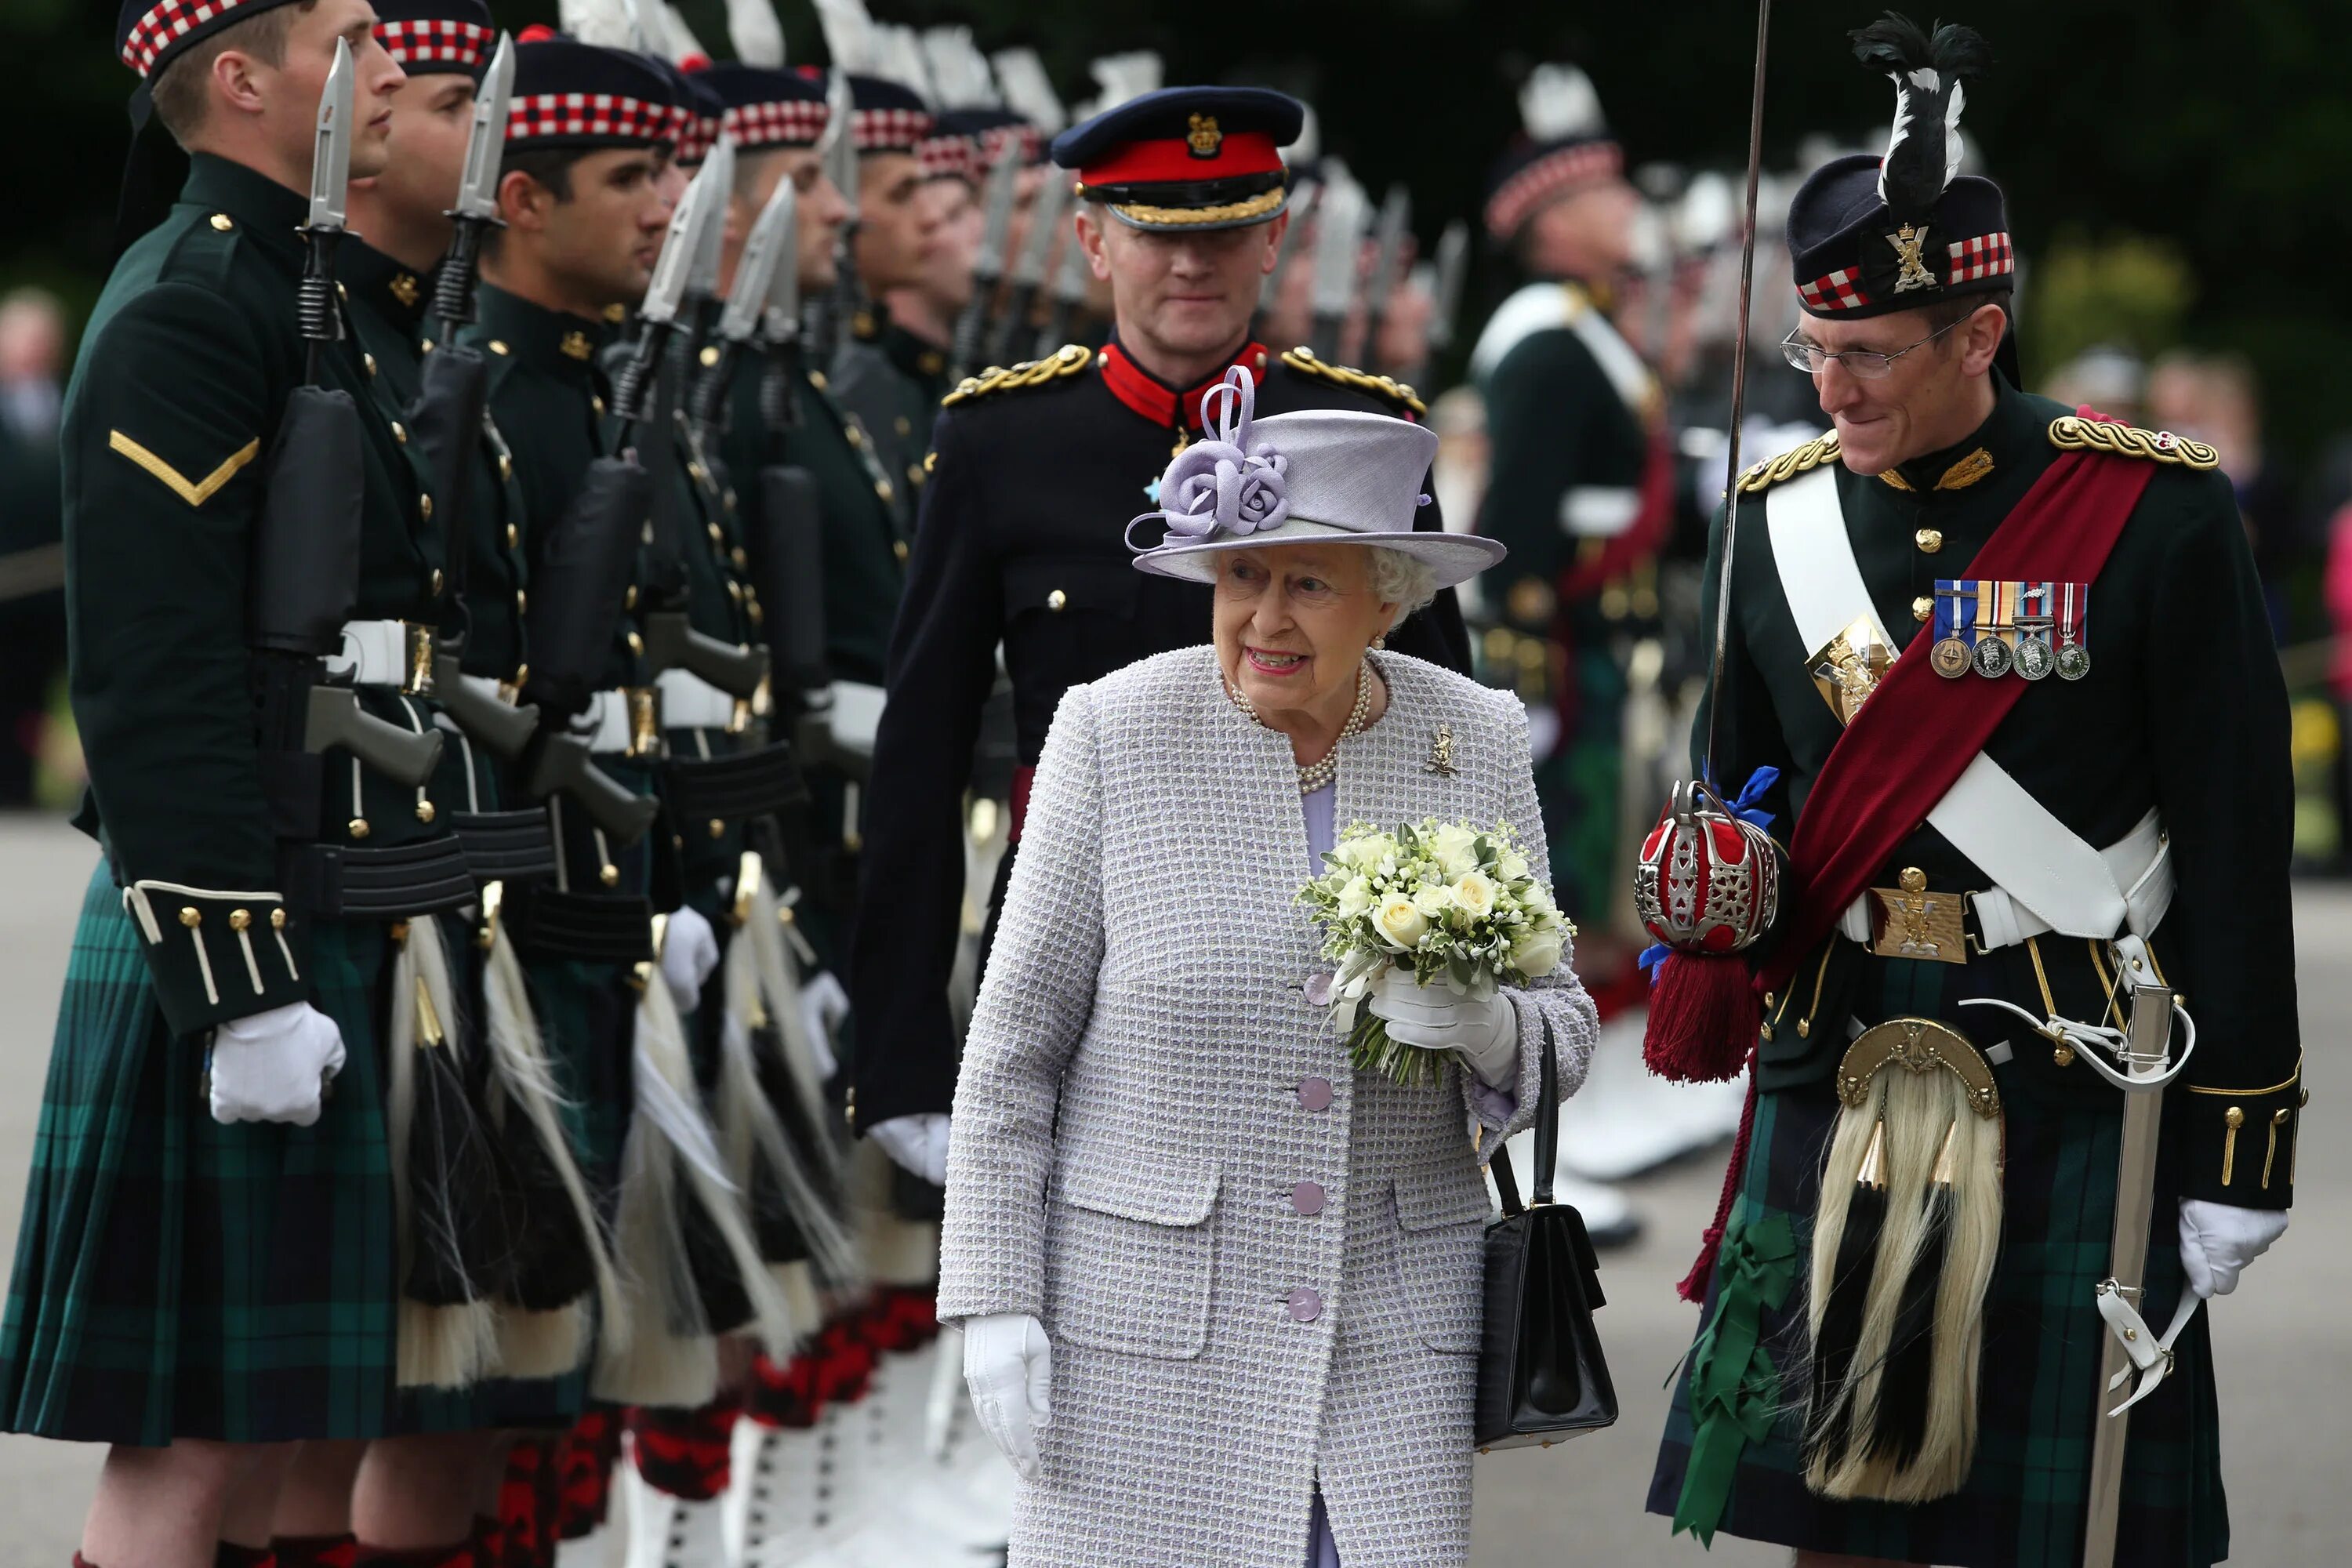 Queen of great britain. Queen Elizabeth Ceremony. Британская монархия. Британский Монарх в Австралии.